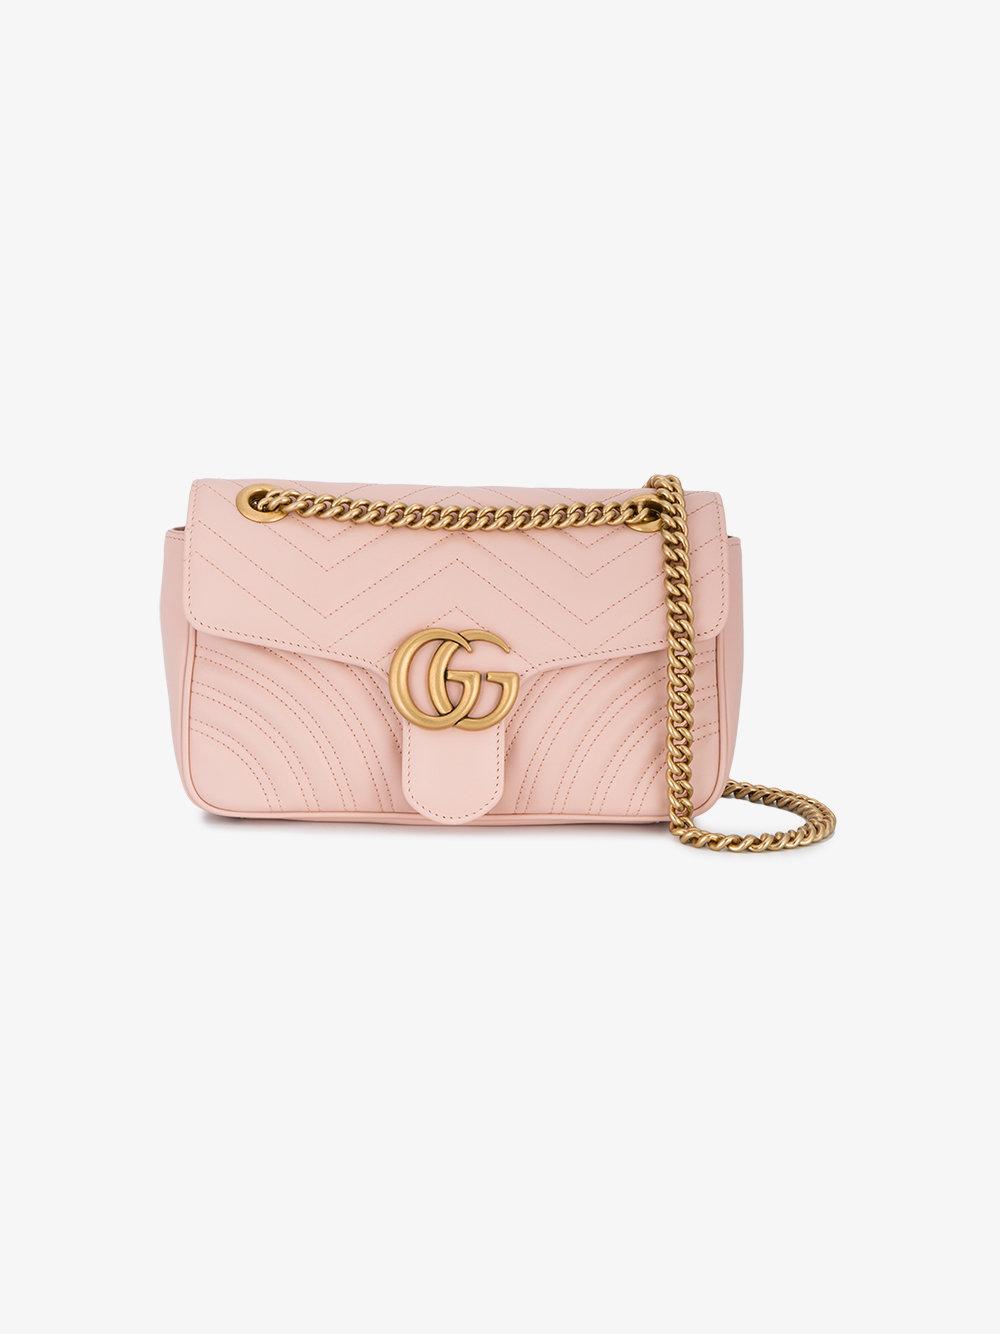 Gucci Pink Marmont Medium Shoulder Bag in Pink - Lyst